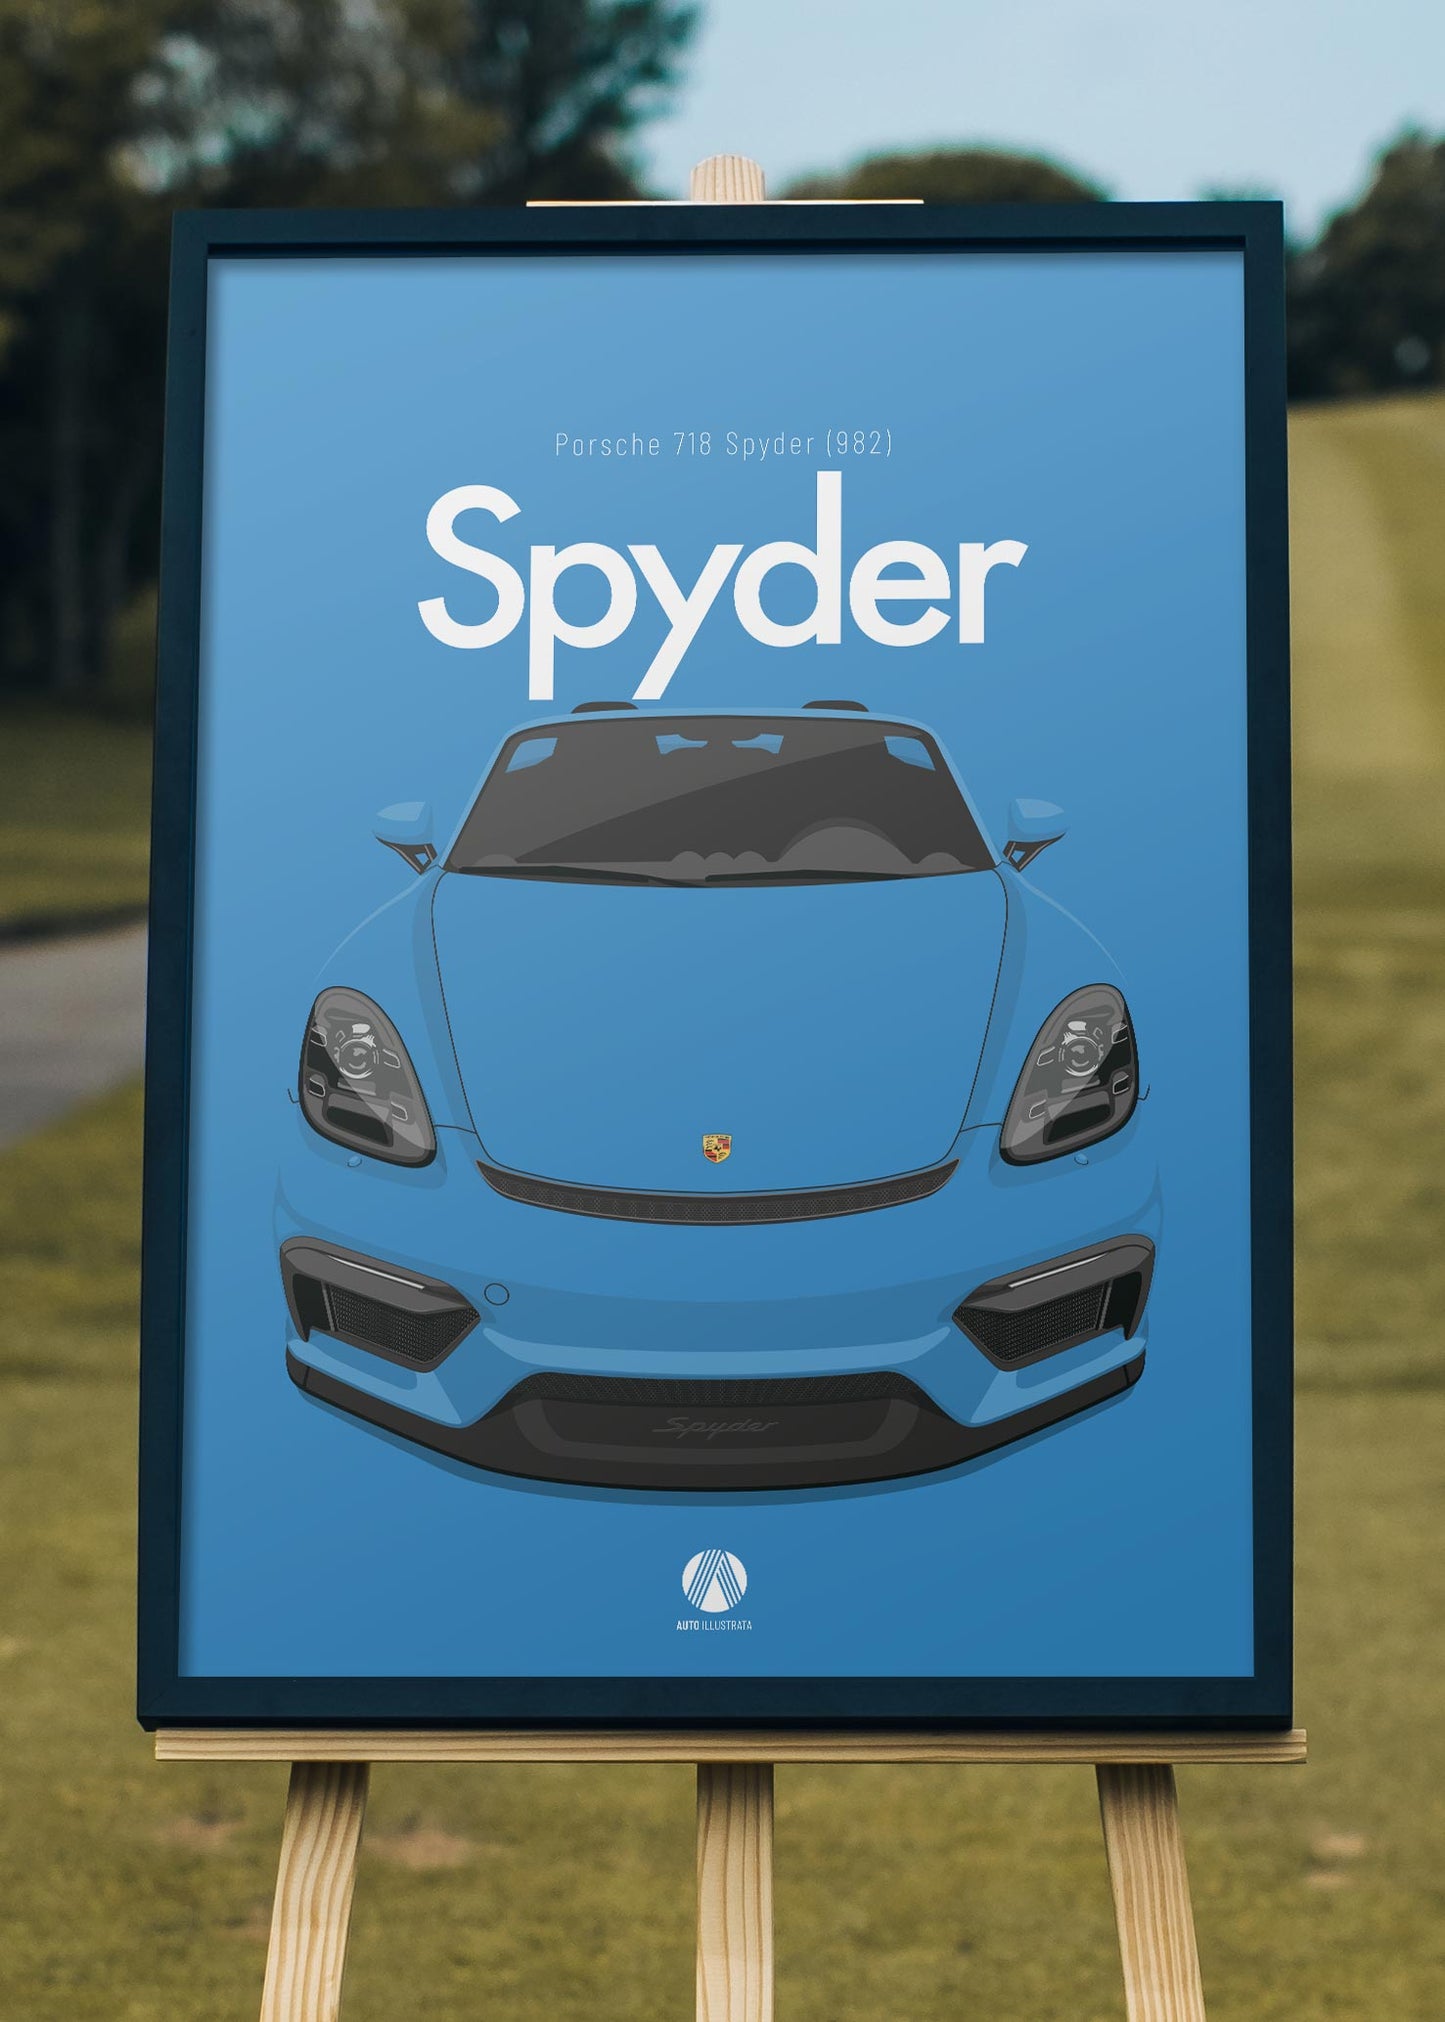 2020 Porsche 718 Spyder (982) - Oslo Blue - poster print